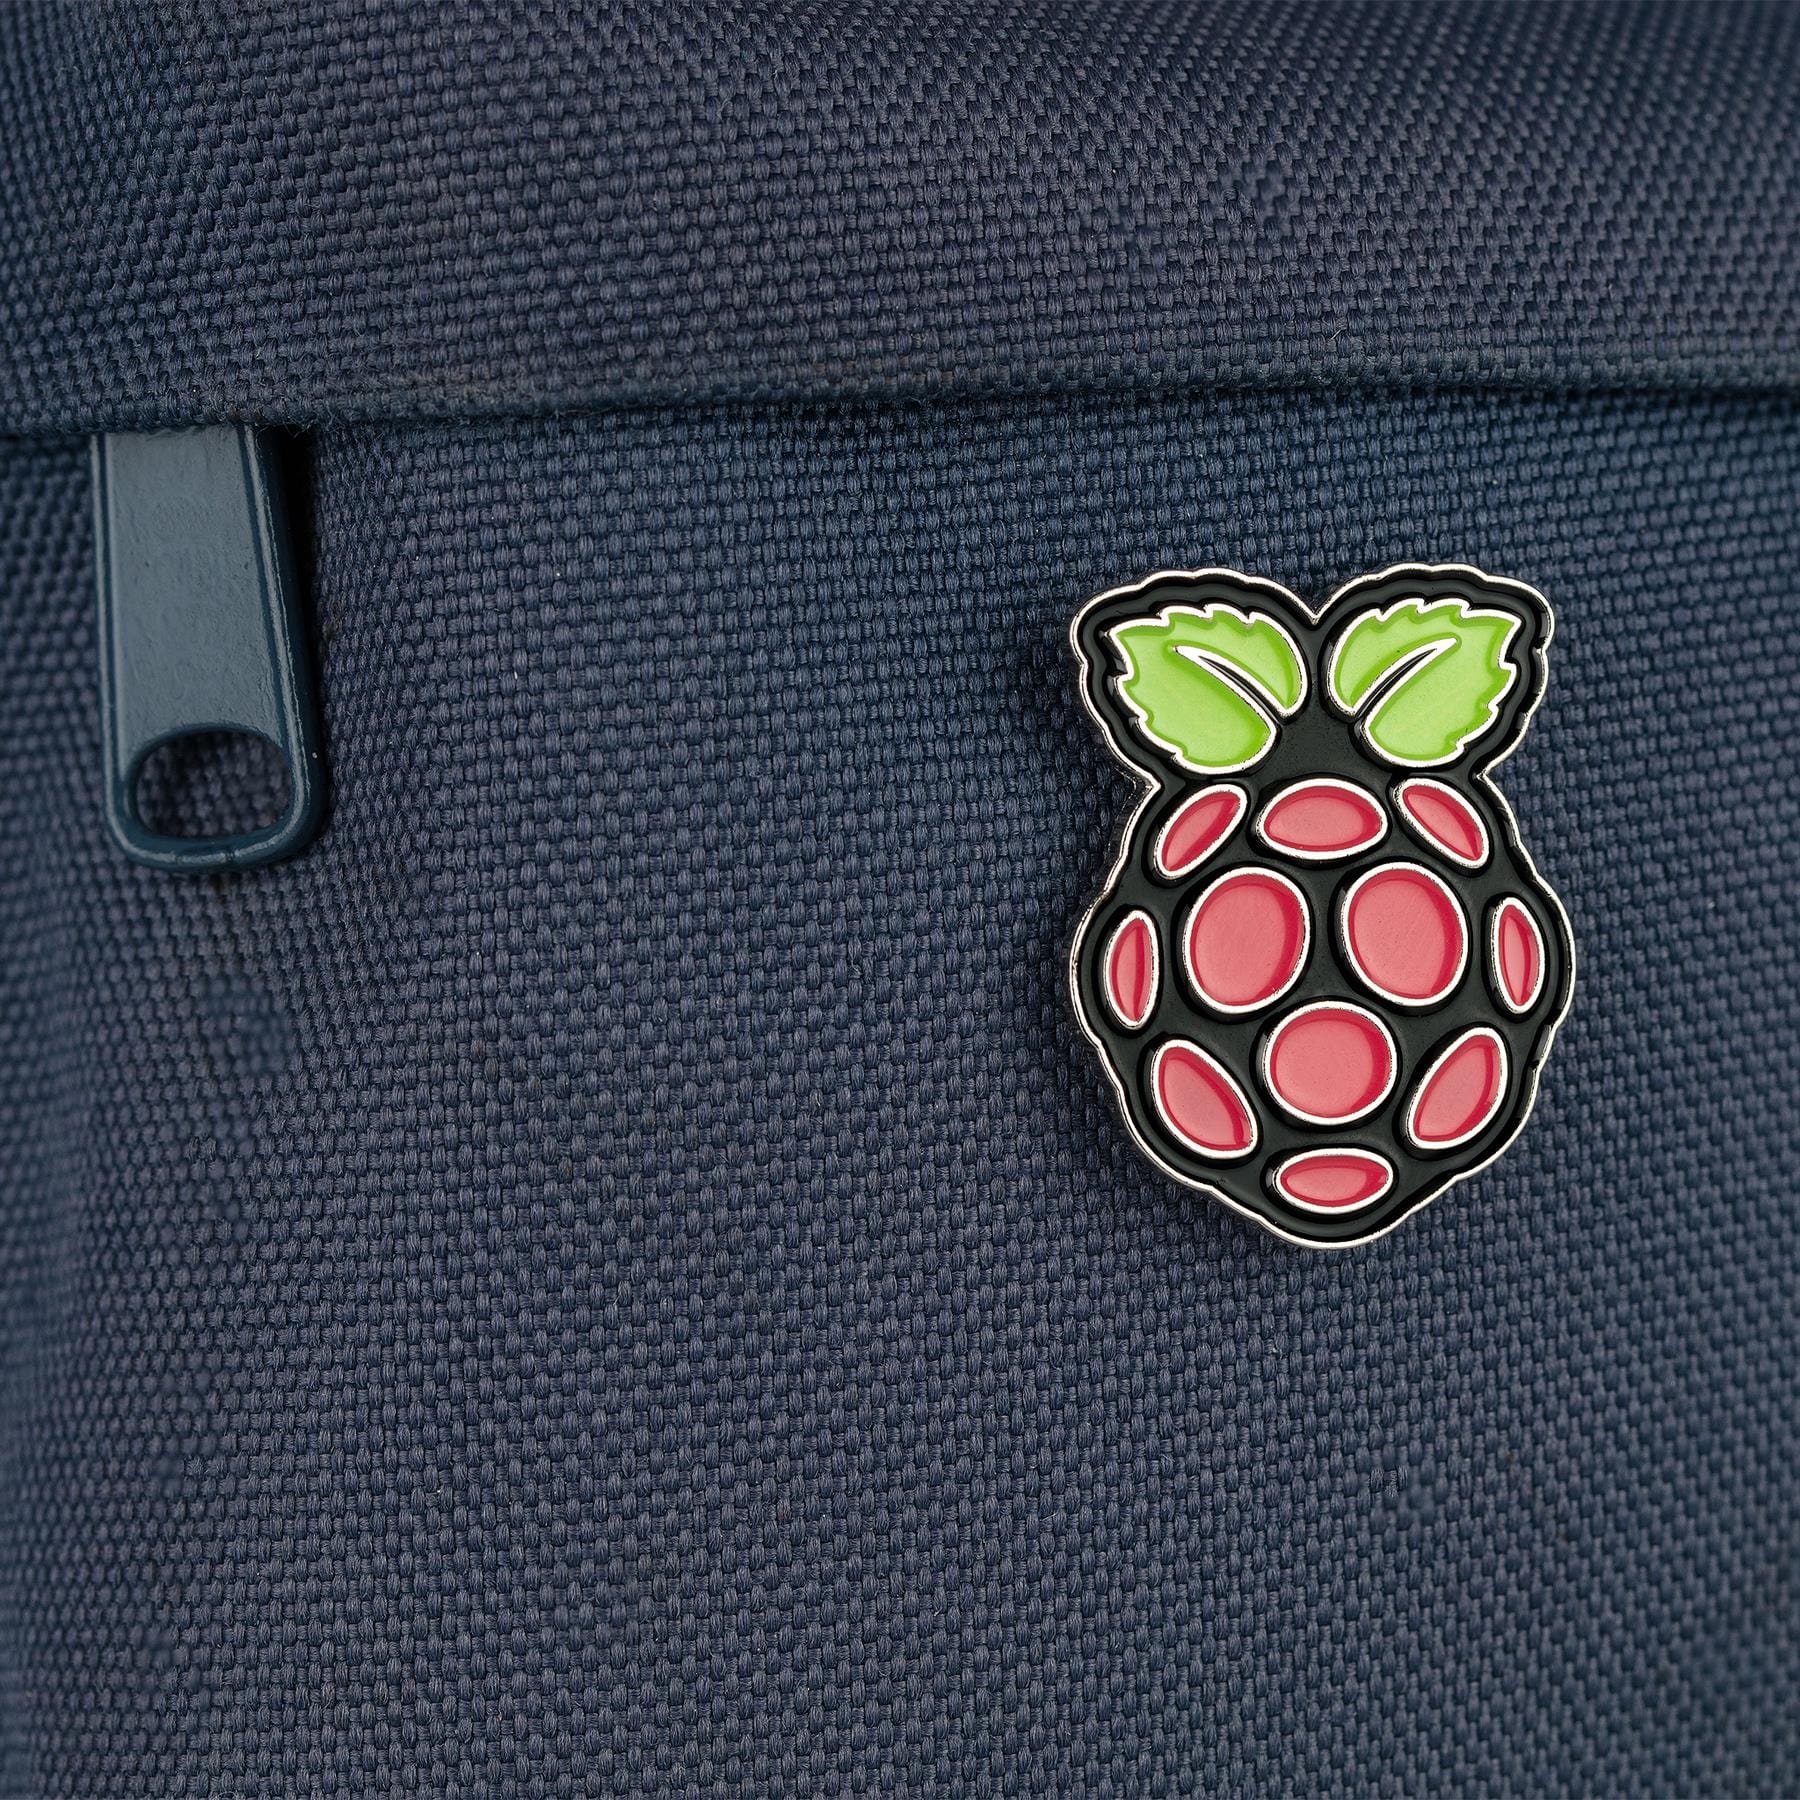 Raspberry Pi Stamped Iron Pin Badge - The Pi Hut